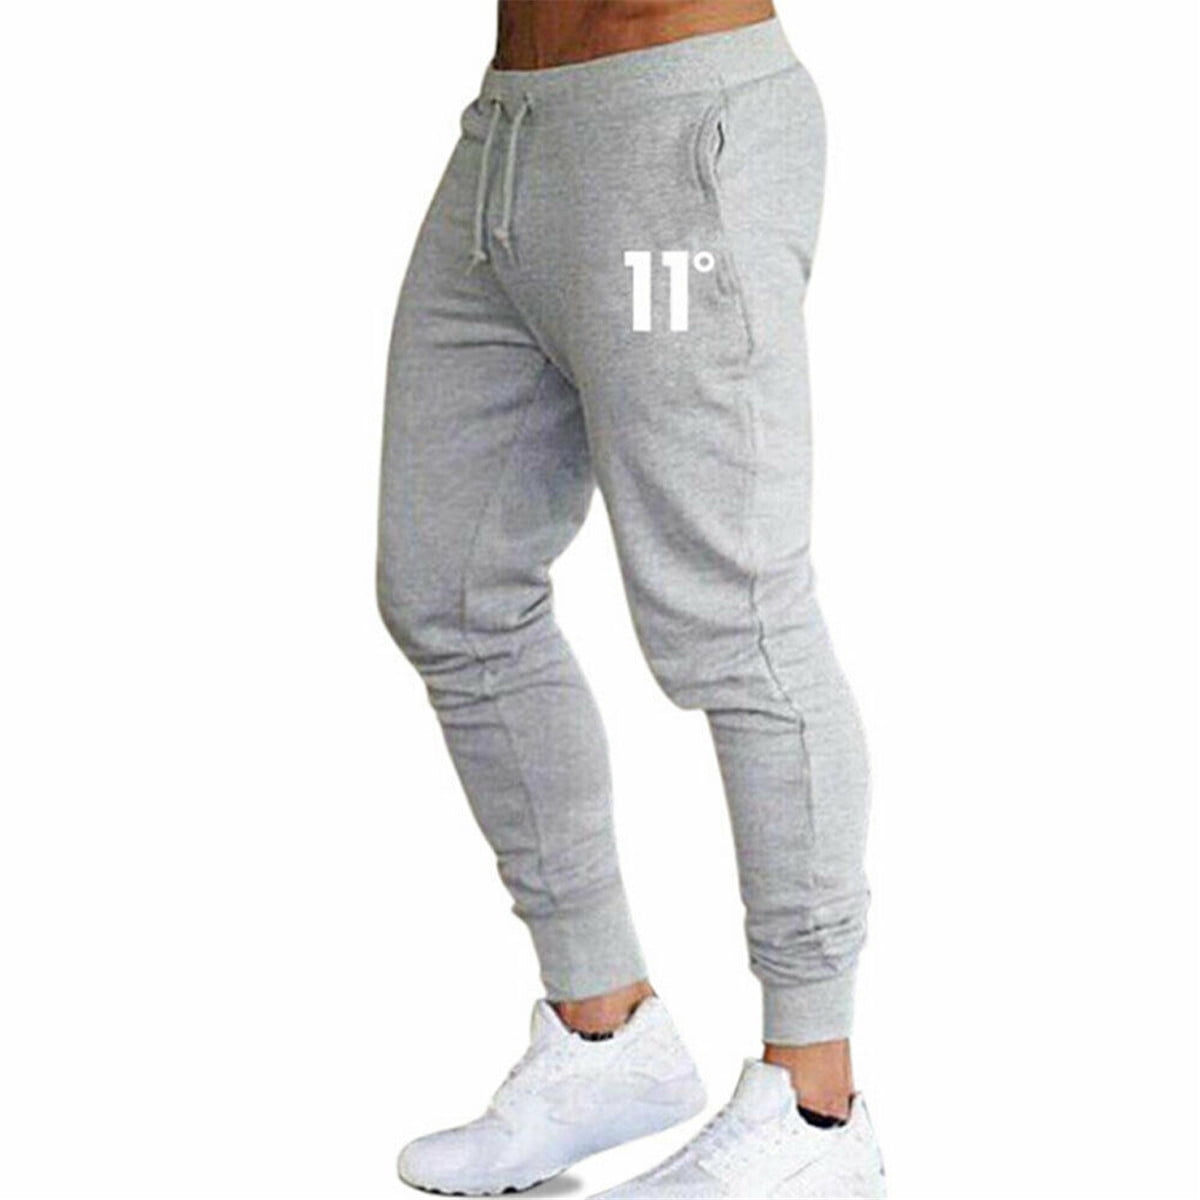 Toro Rocco Mens Tracksuit Bottoms Cargo Side Pockets Regular Fit Fleece Jog Bottom Jogging Sweat Pants Gym Loungewear